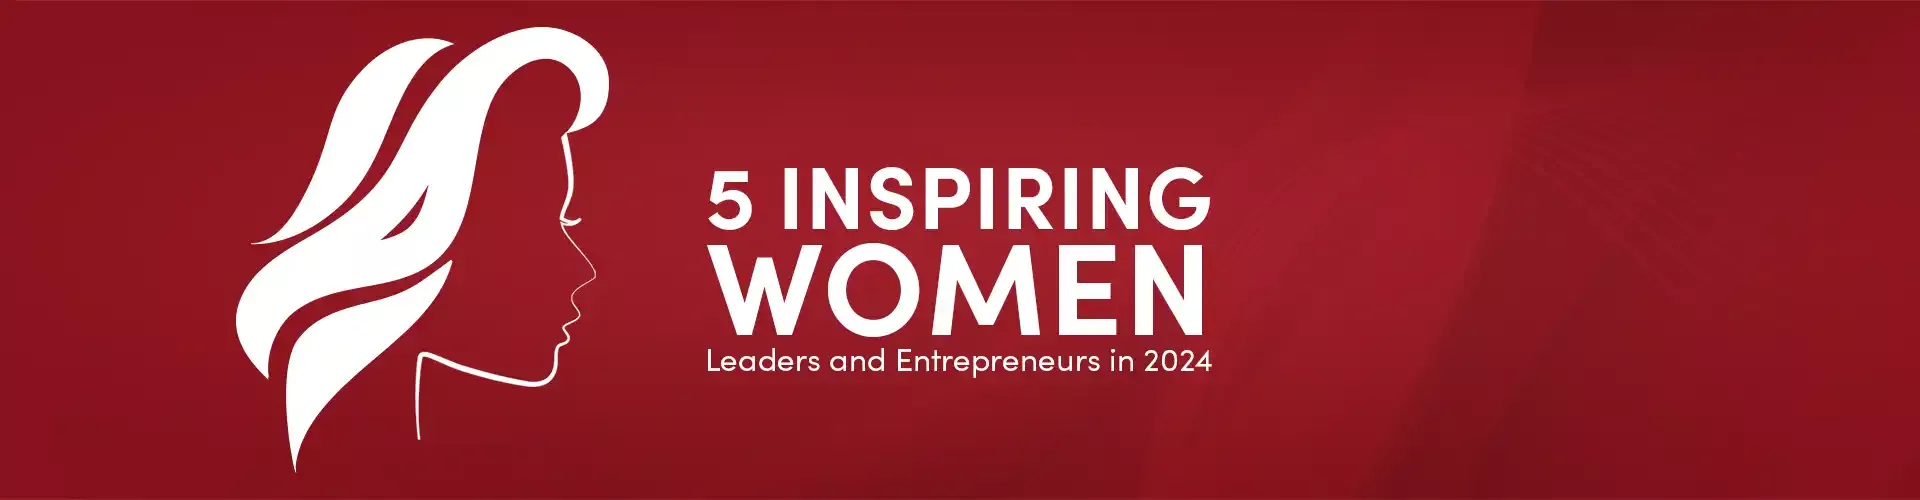 5 Inspiring Women Leaders and Entrepreneurs in 2024